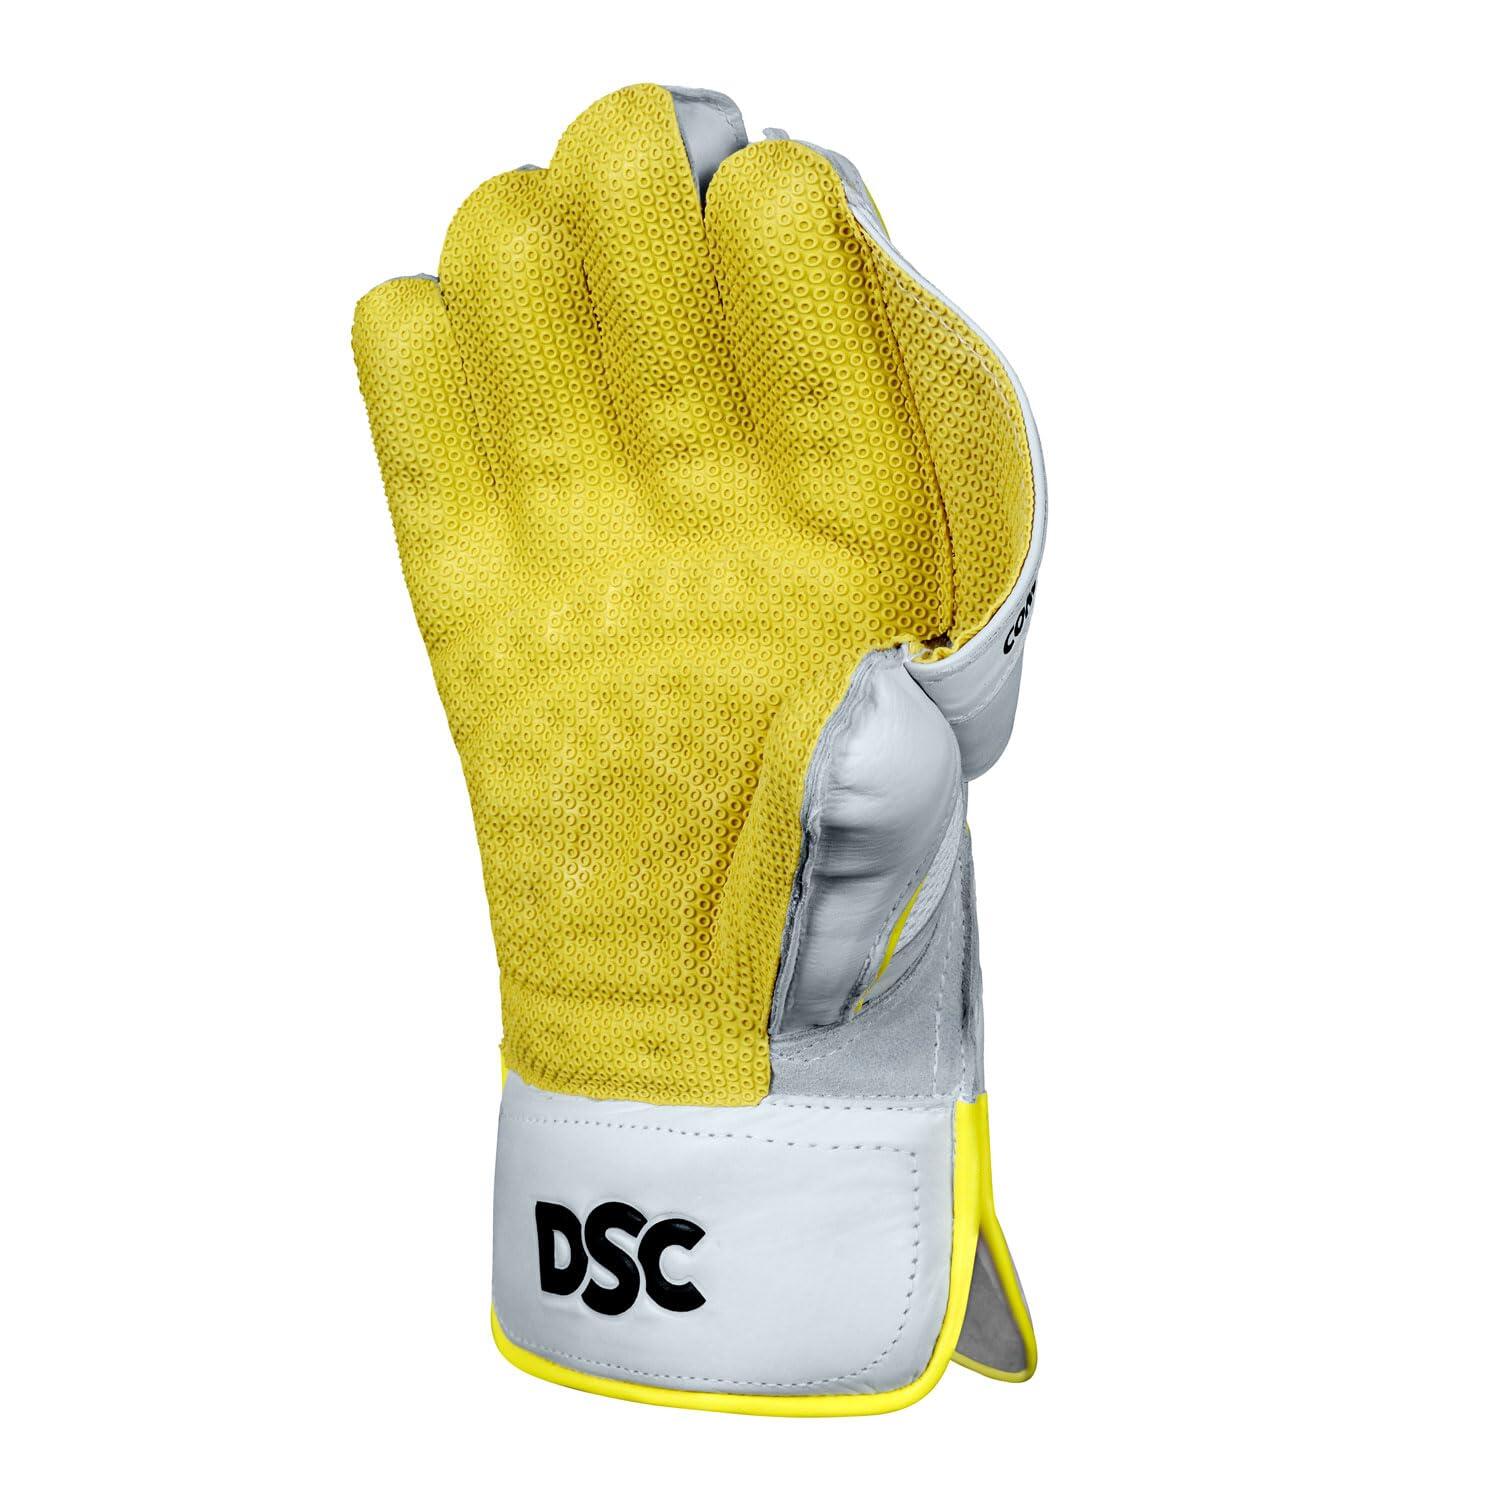 DSC Condor Flite Cricket Wicket Keeping Gloves 2/5